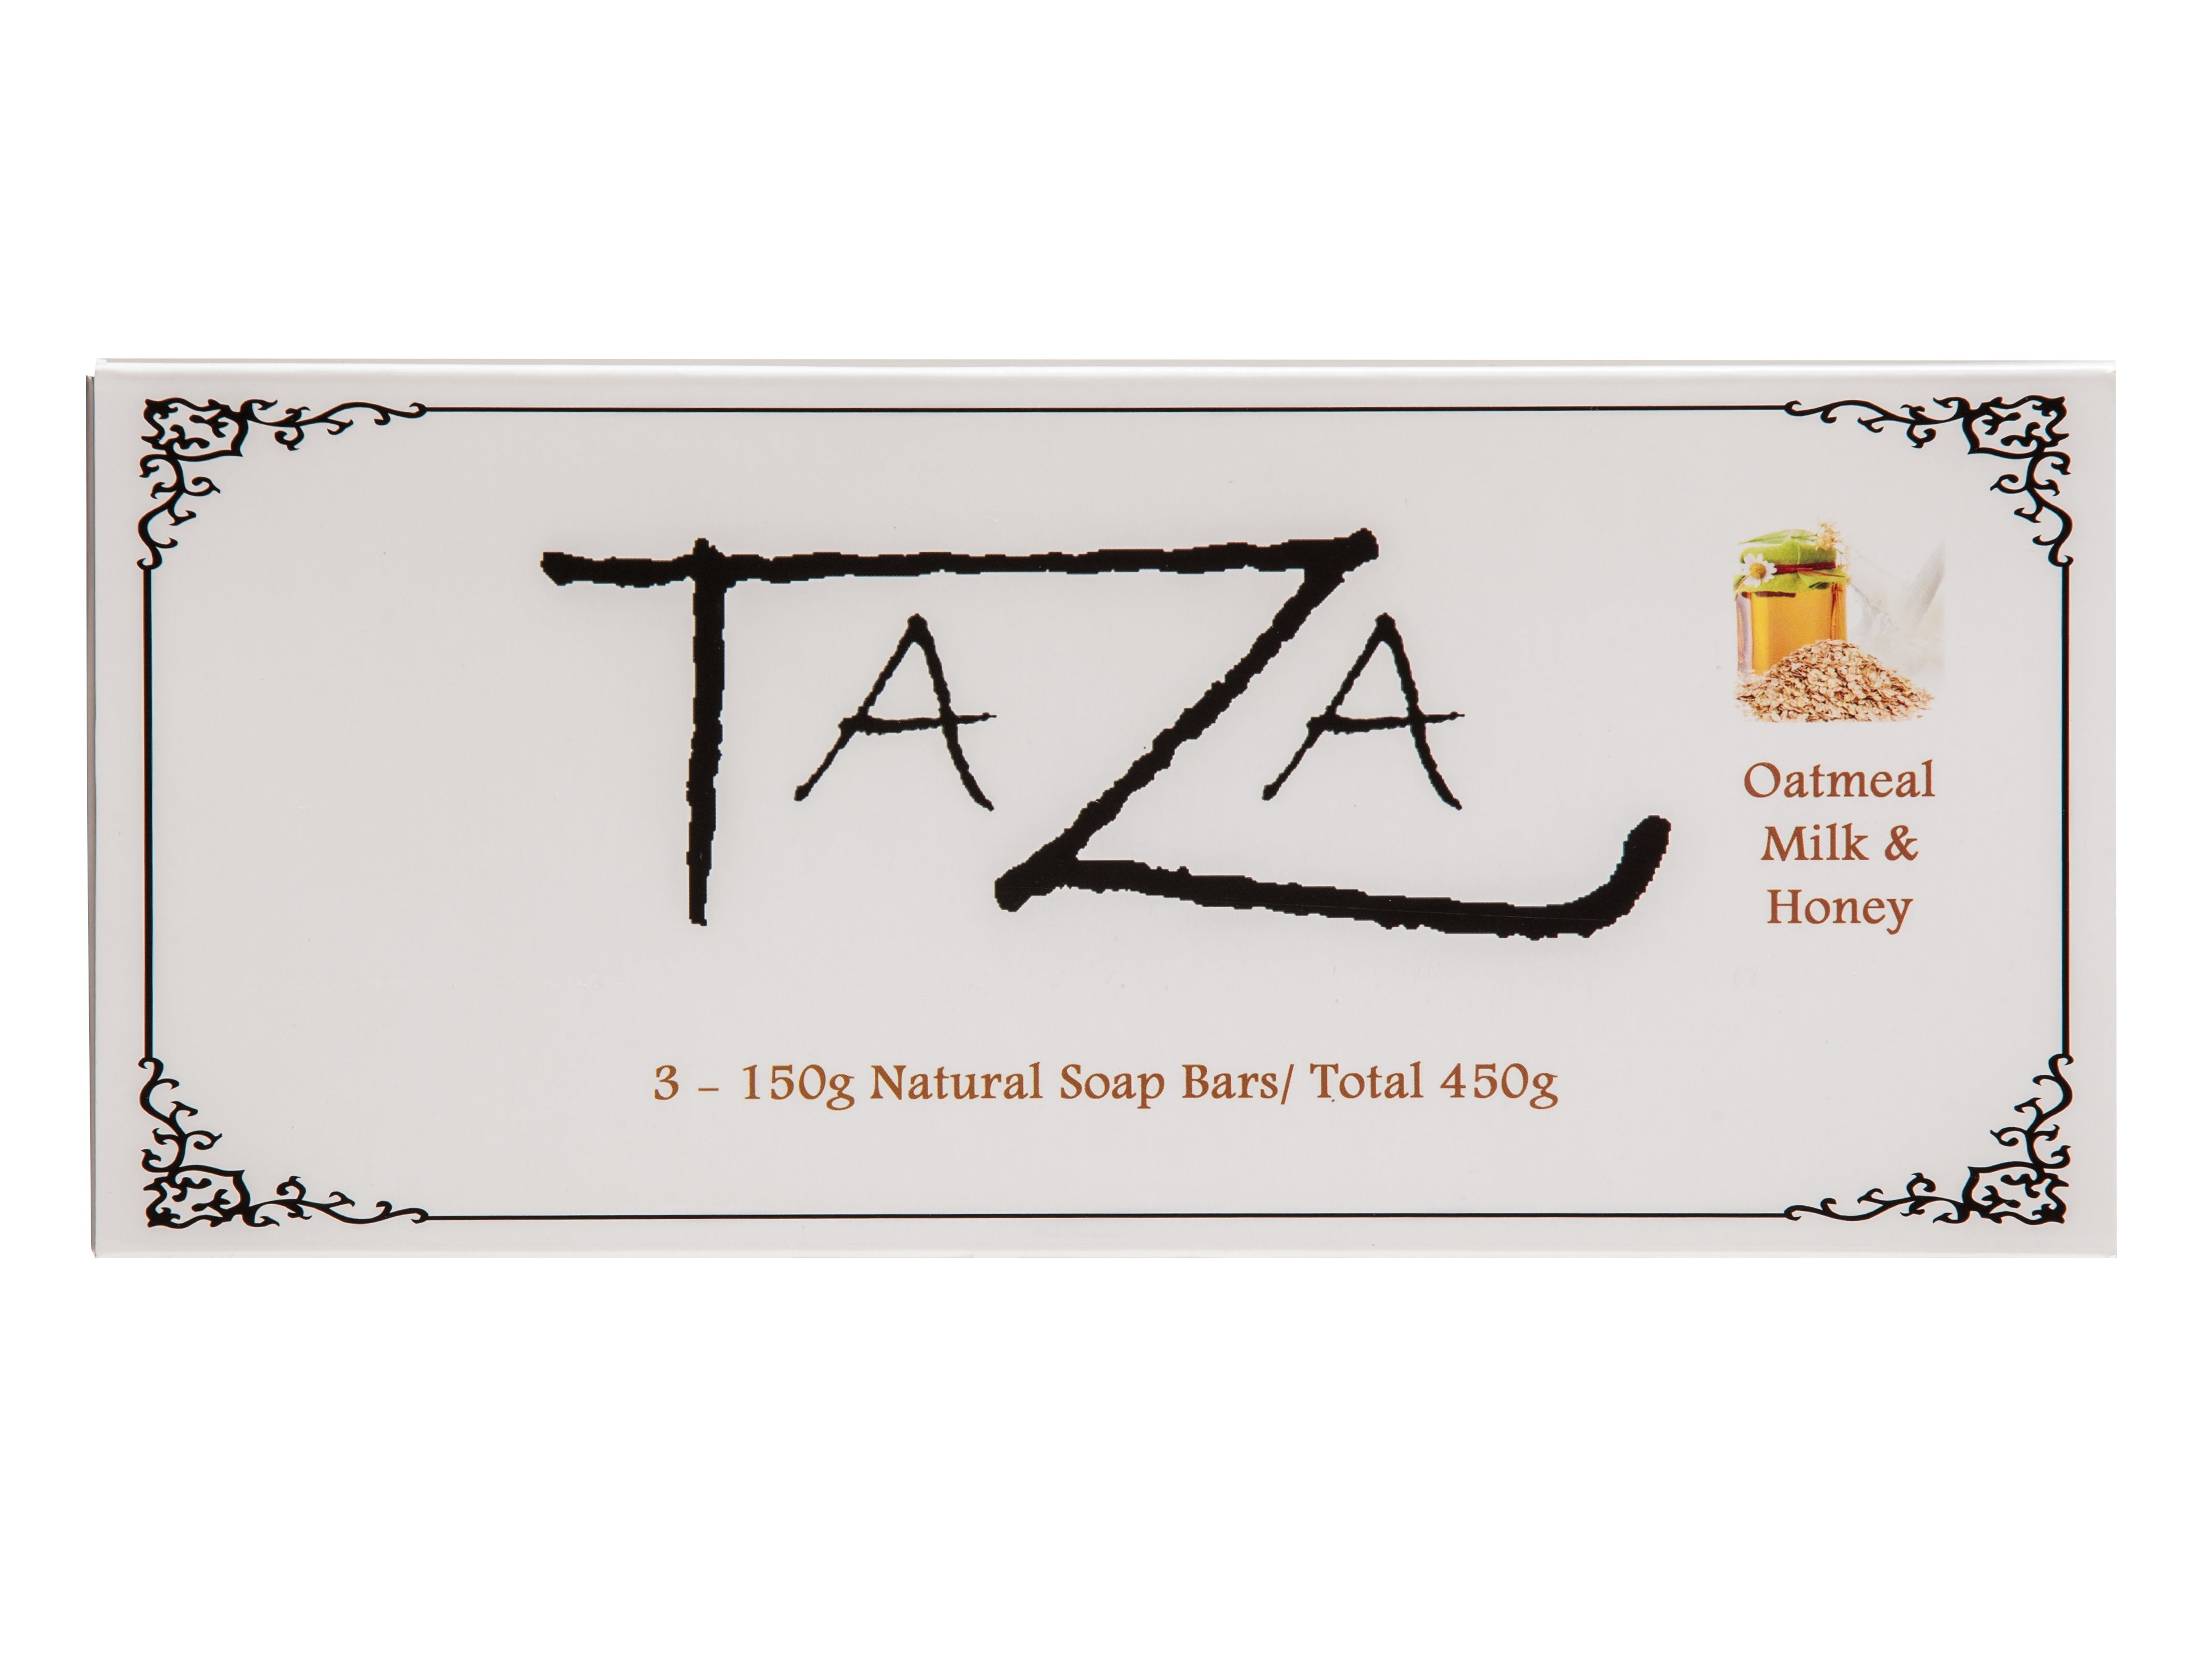 Taza Oatmeal Milk & Honey Natural Soap (Pack of 3)